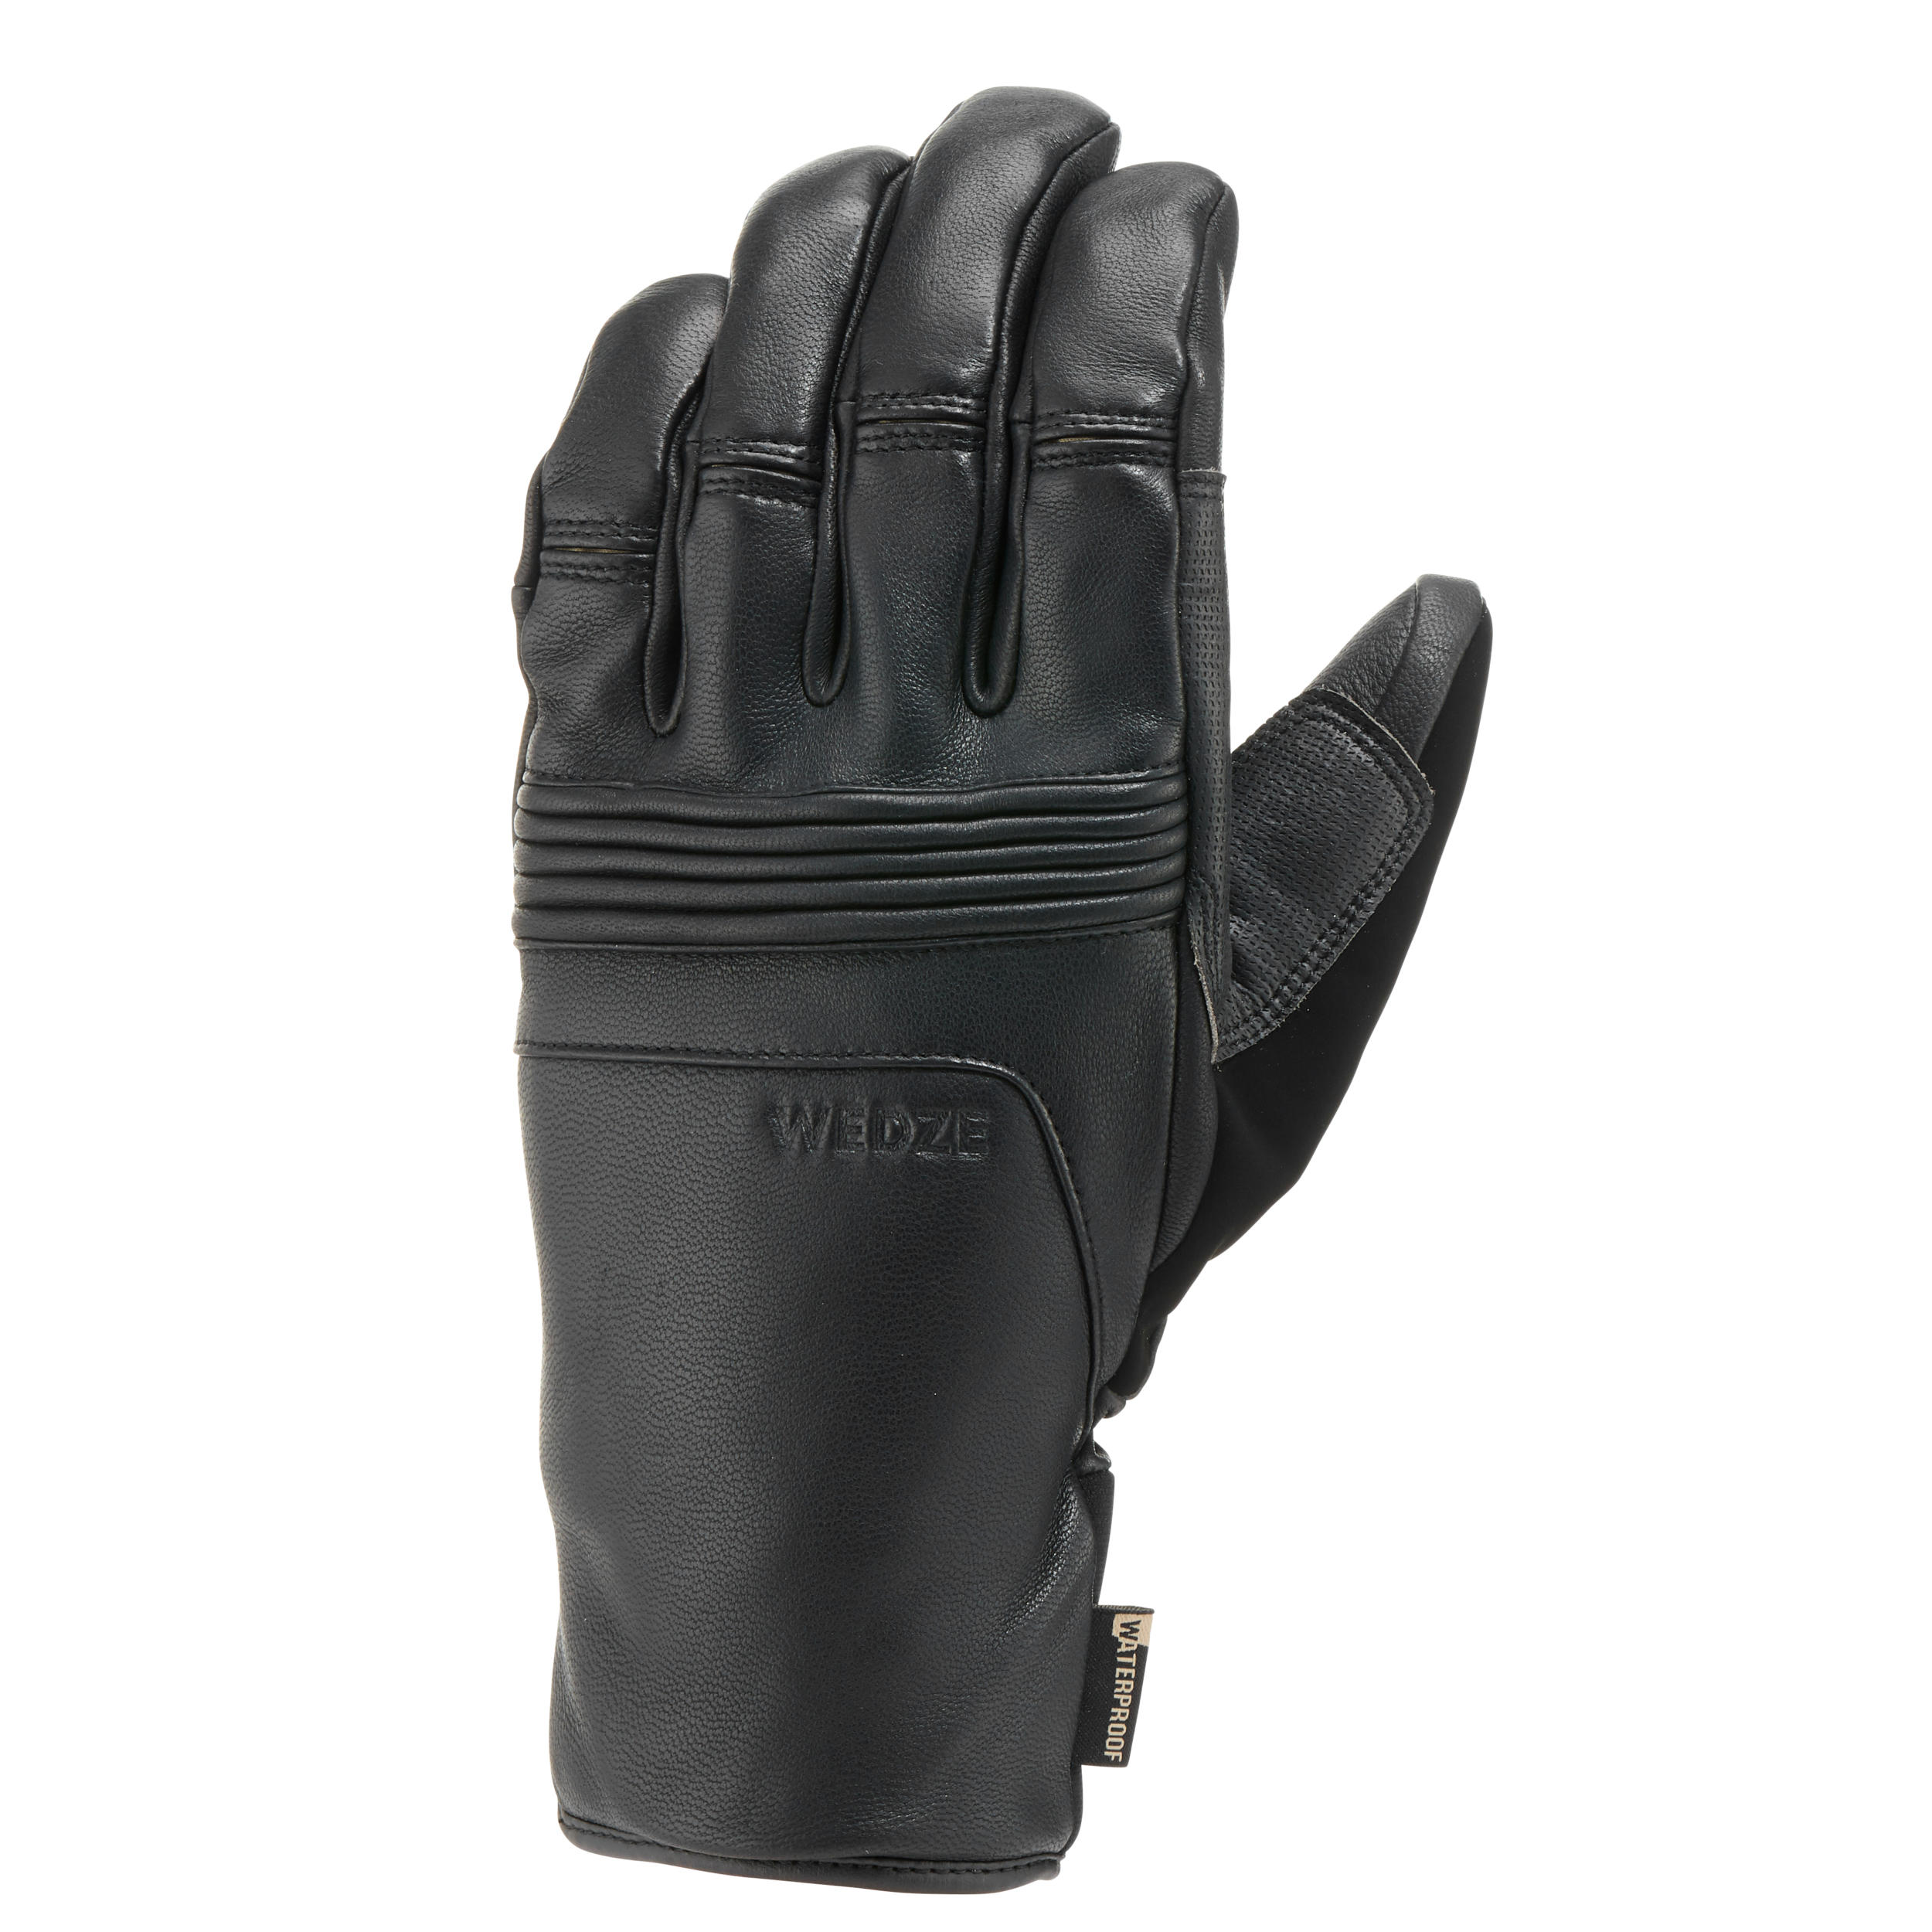 Lyperkin Winter Gloves Premium Non-Slip Exposure Finger Gloves Half Finger Warm Dexterity Gloves for Men Women for Cycling Running Outdoor Activities 